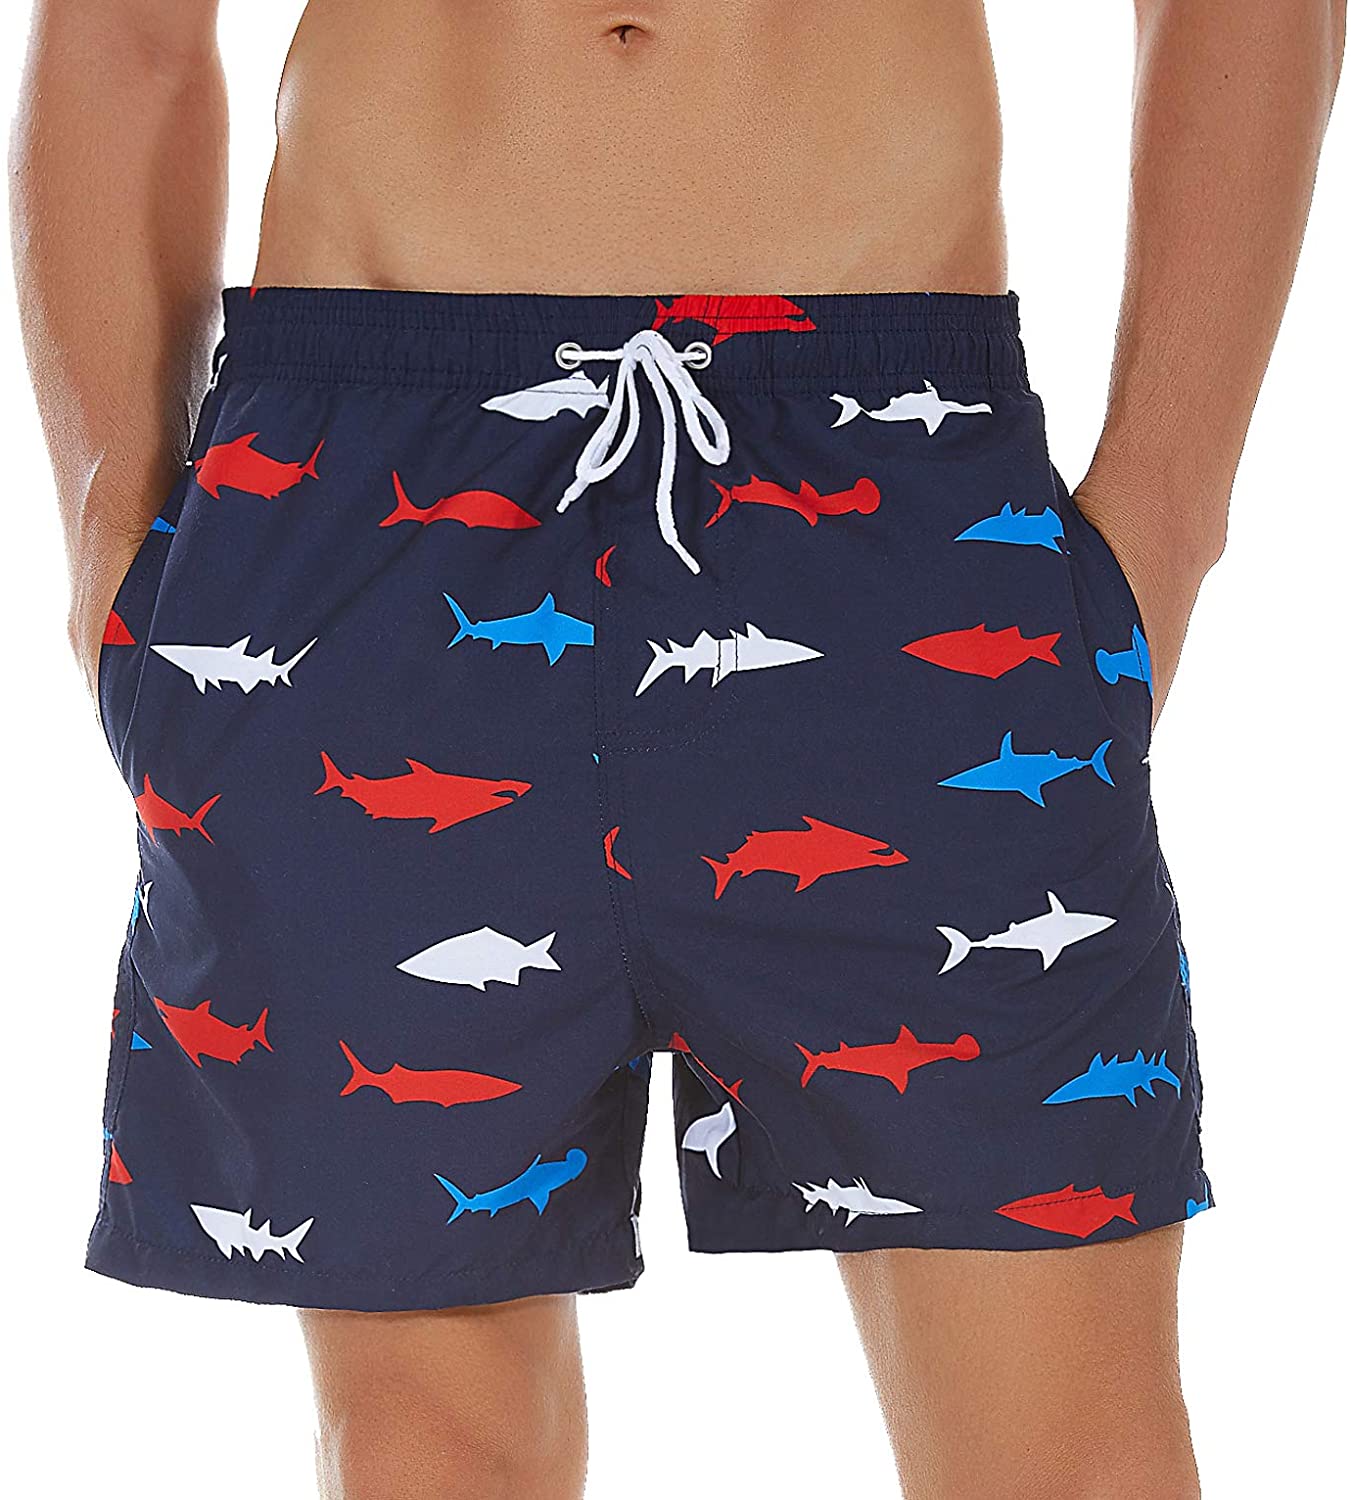 Silkworld Mens Swim Trunks Quick Dry Short Vitality Printed Beach Shorts Ebay 